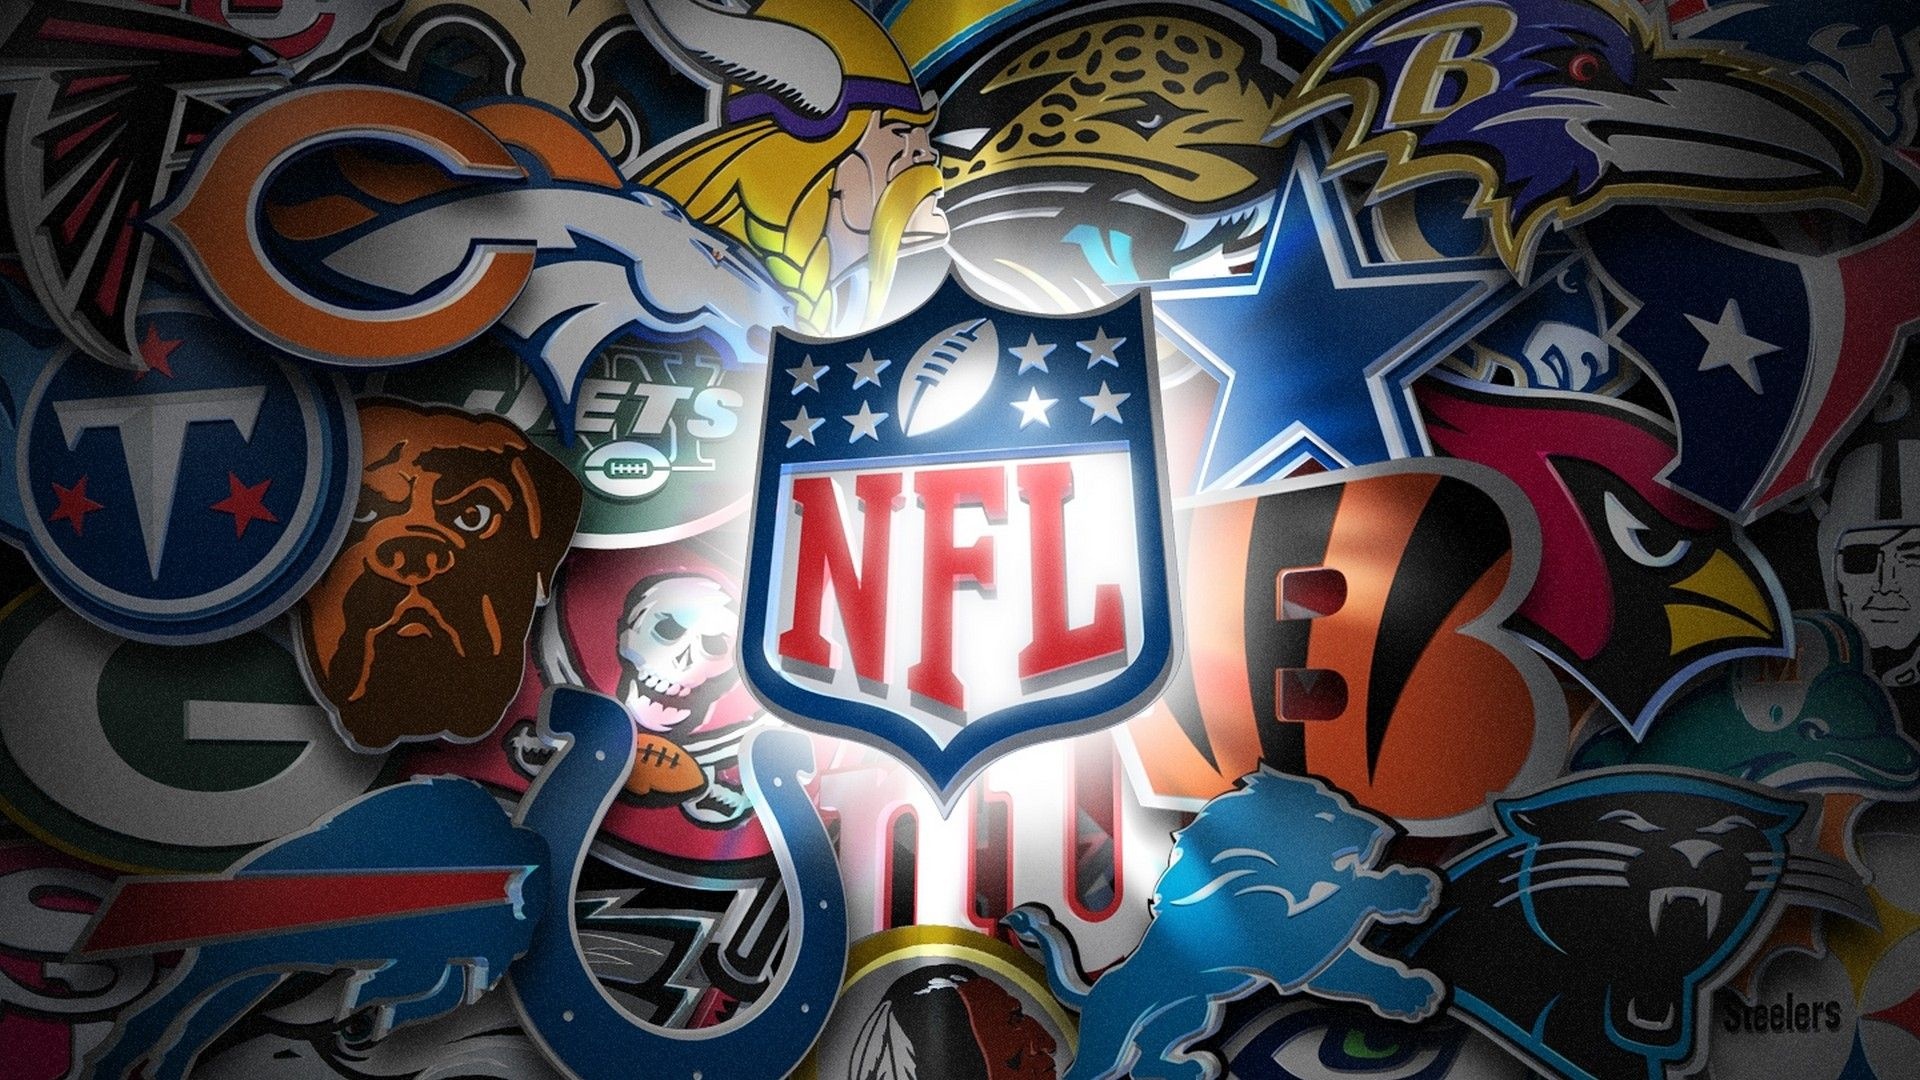 NFL teams wallpapers, Football franchises, Team pride, Dynamic backgrounds, 1920x1080 Full HD Desktop